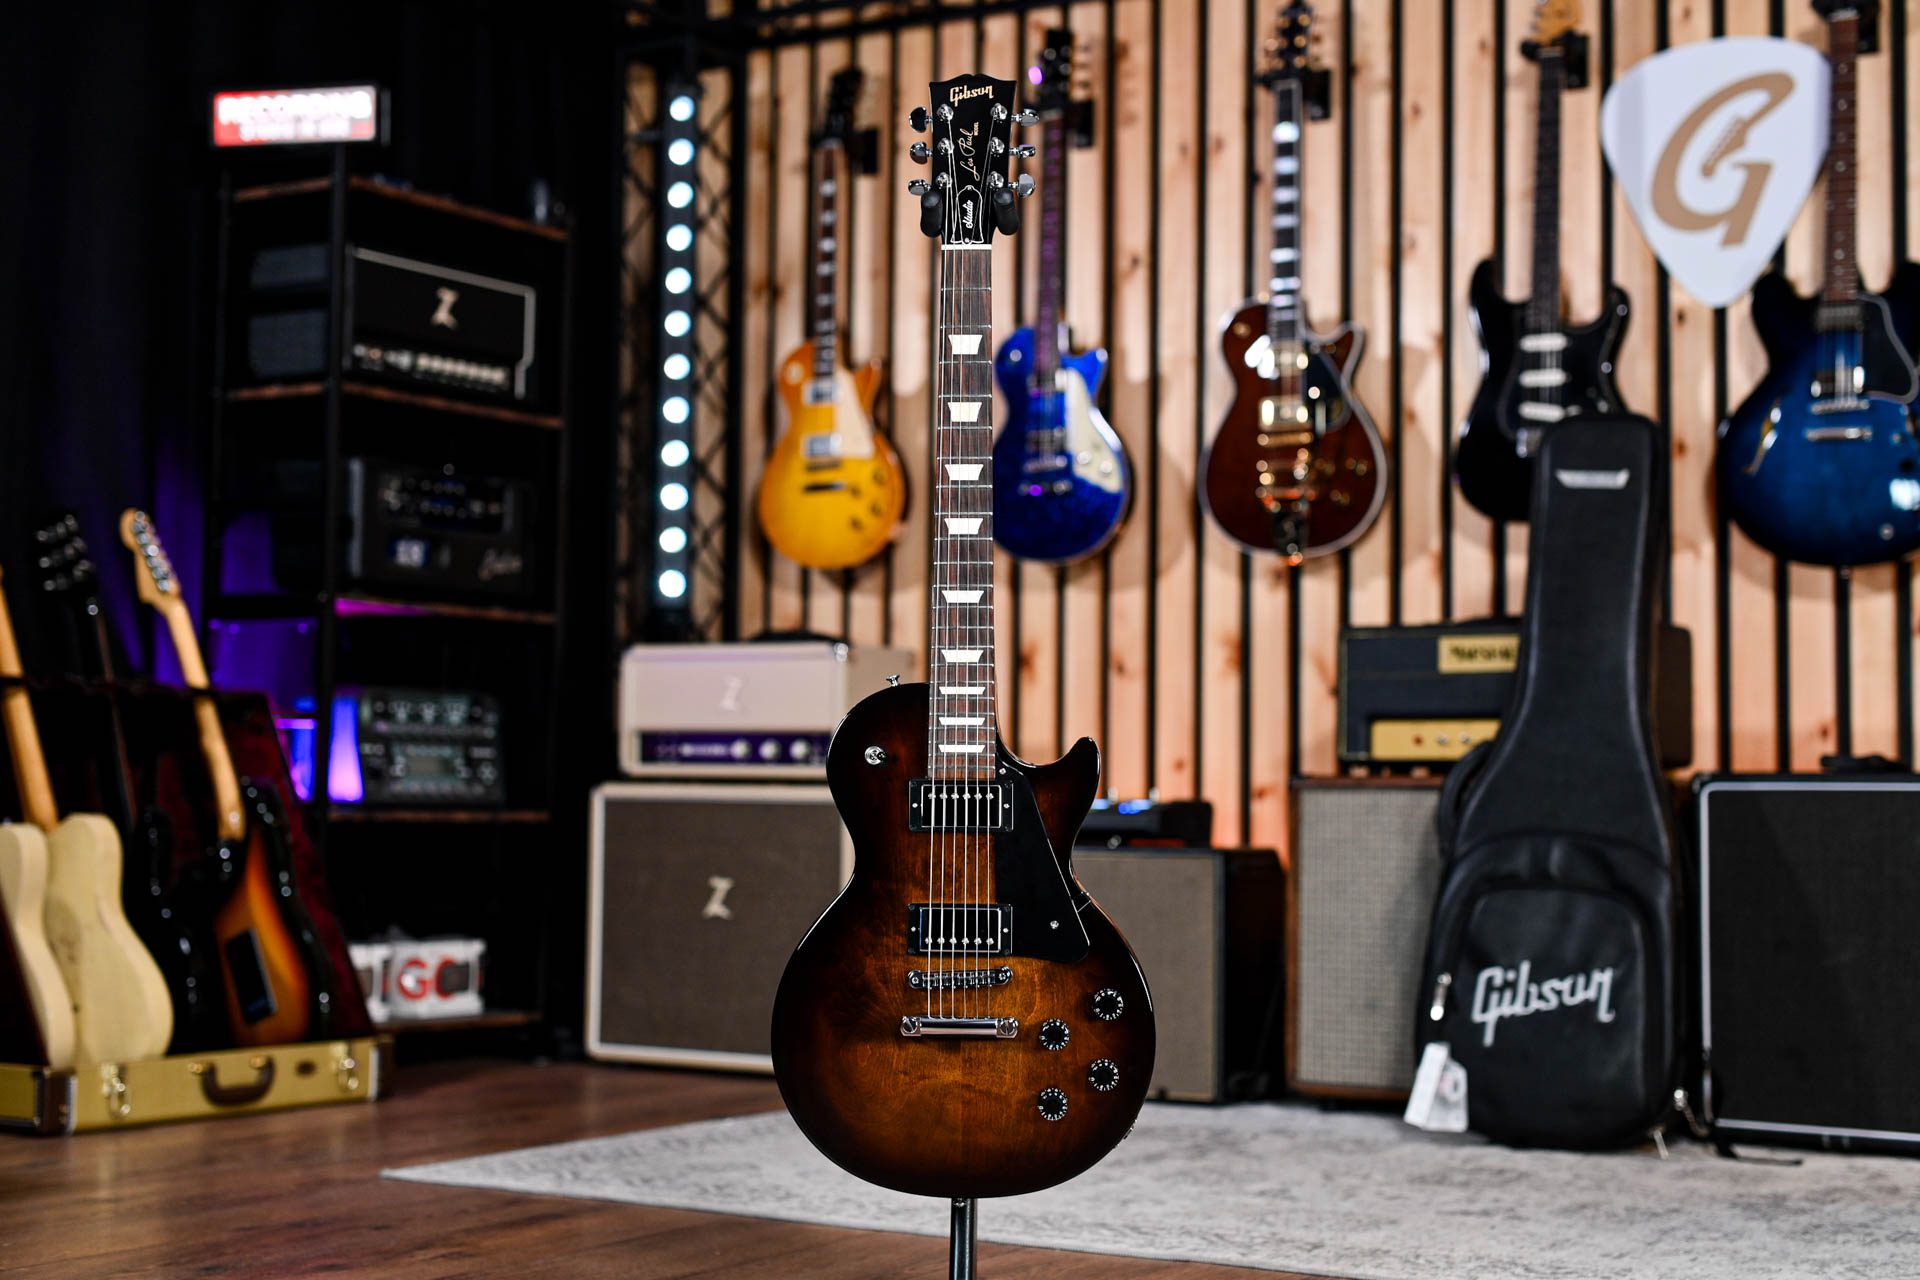 Gibson Les Paul Studio in Smokehouse Burst - Guitar Gear Giveaway